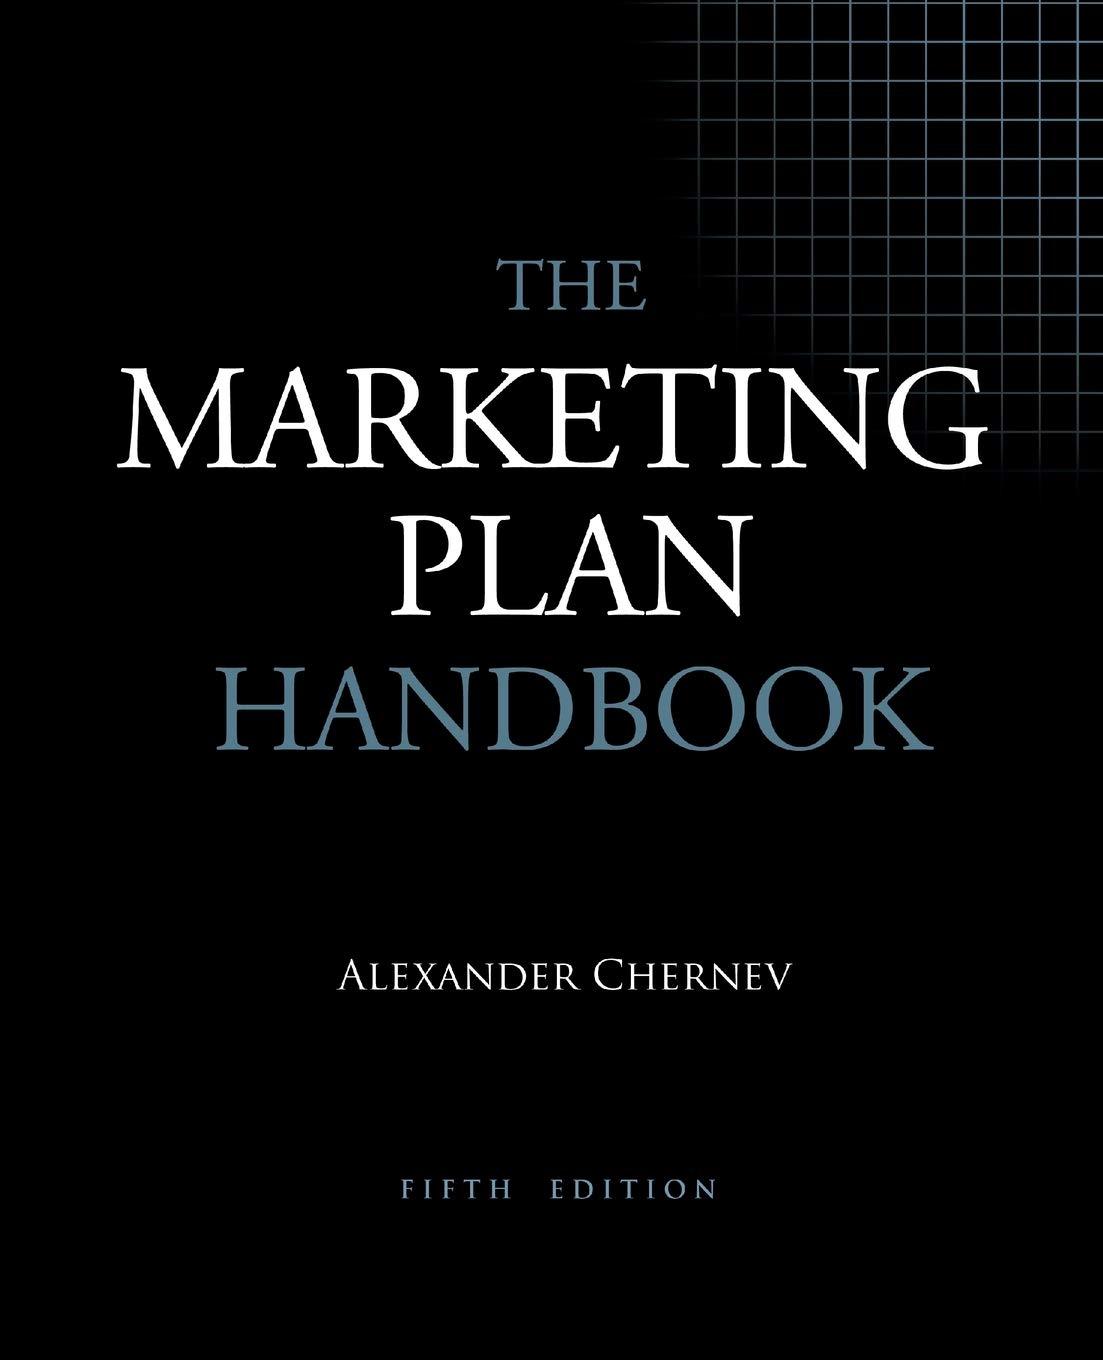 the marketing plan handbook 5th edition alexander chernev 1936572559, 978-1936572557